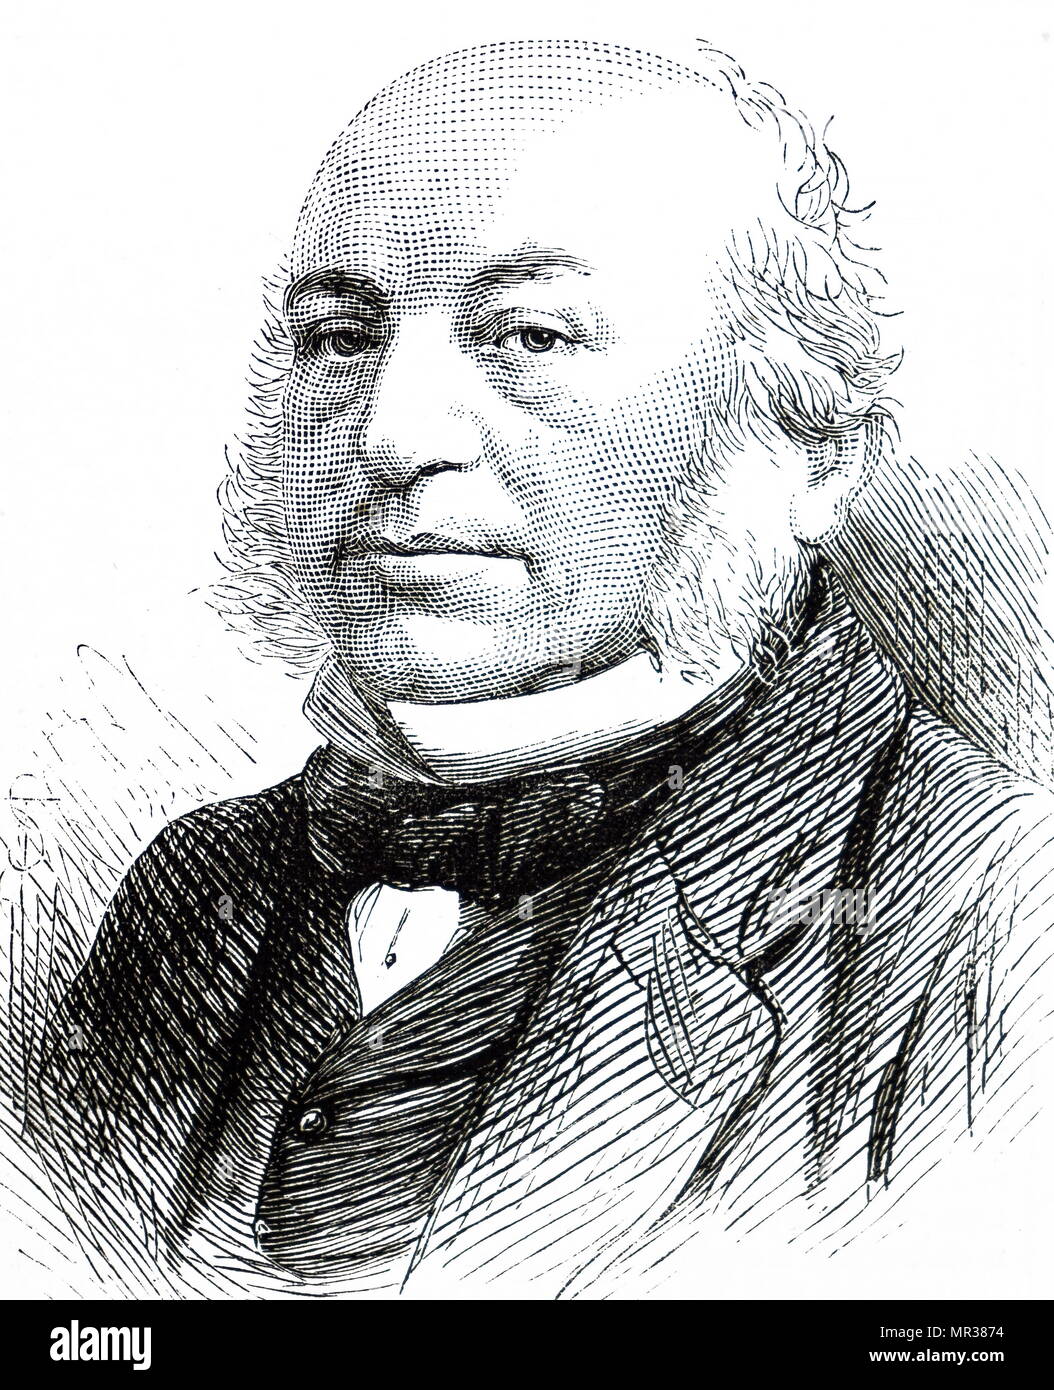 Retrato de Sir Anthony Rothschild, primer Baronet (1810-1876) un financista británico y un miembro de la prominente familia banca Rothschild. Fecha del siglo XIX Foto de stock